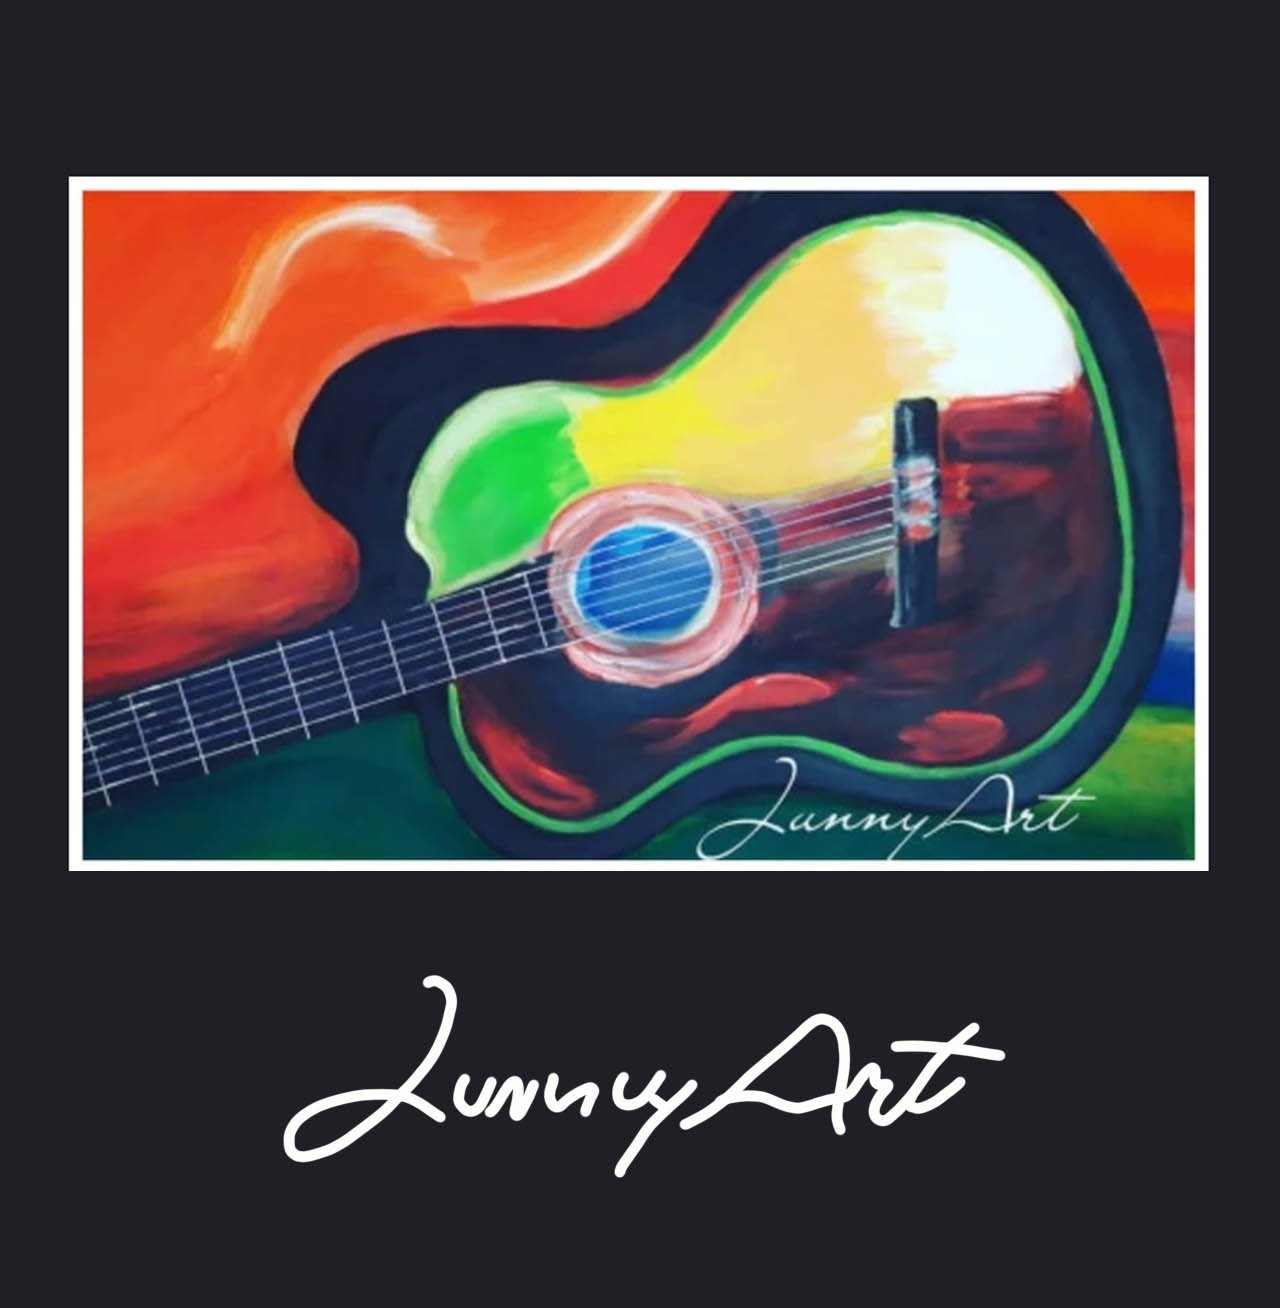 Junny painting gitar